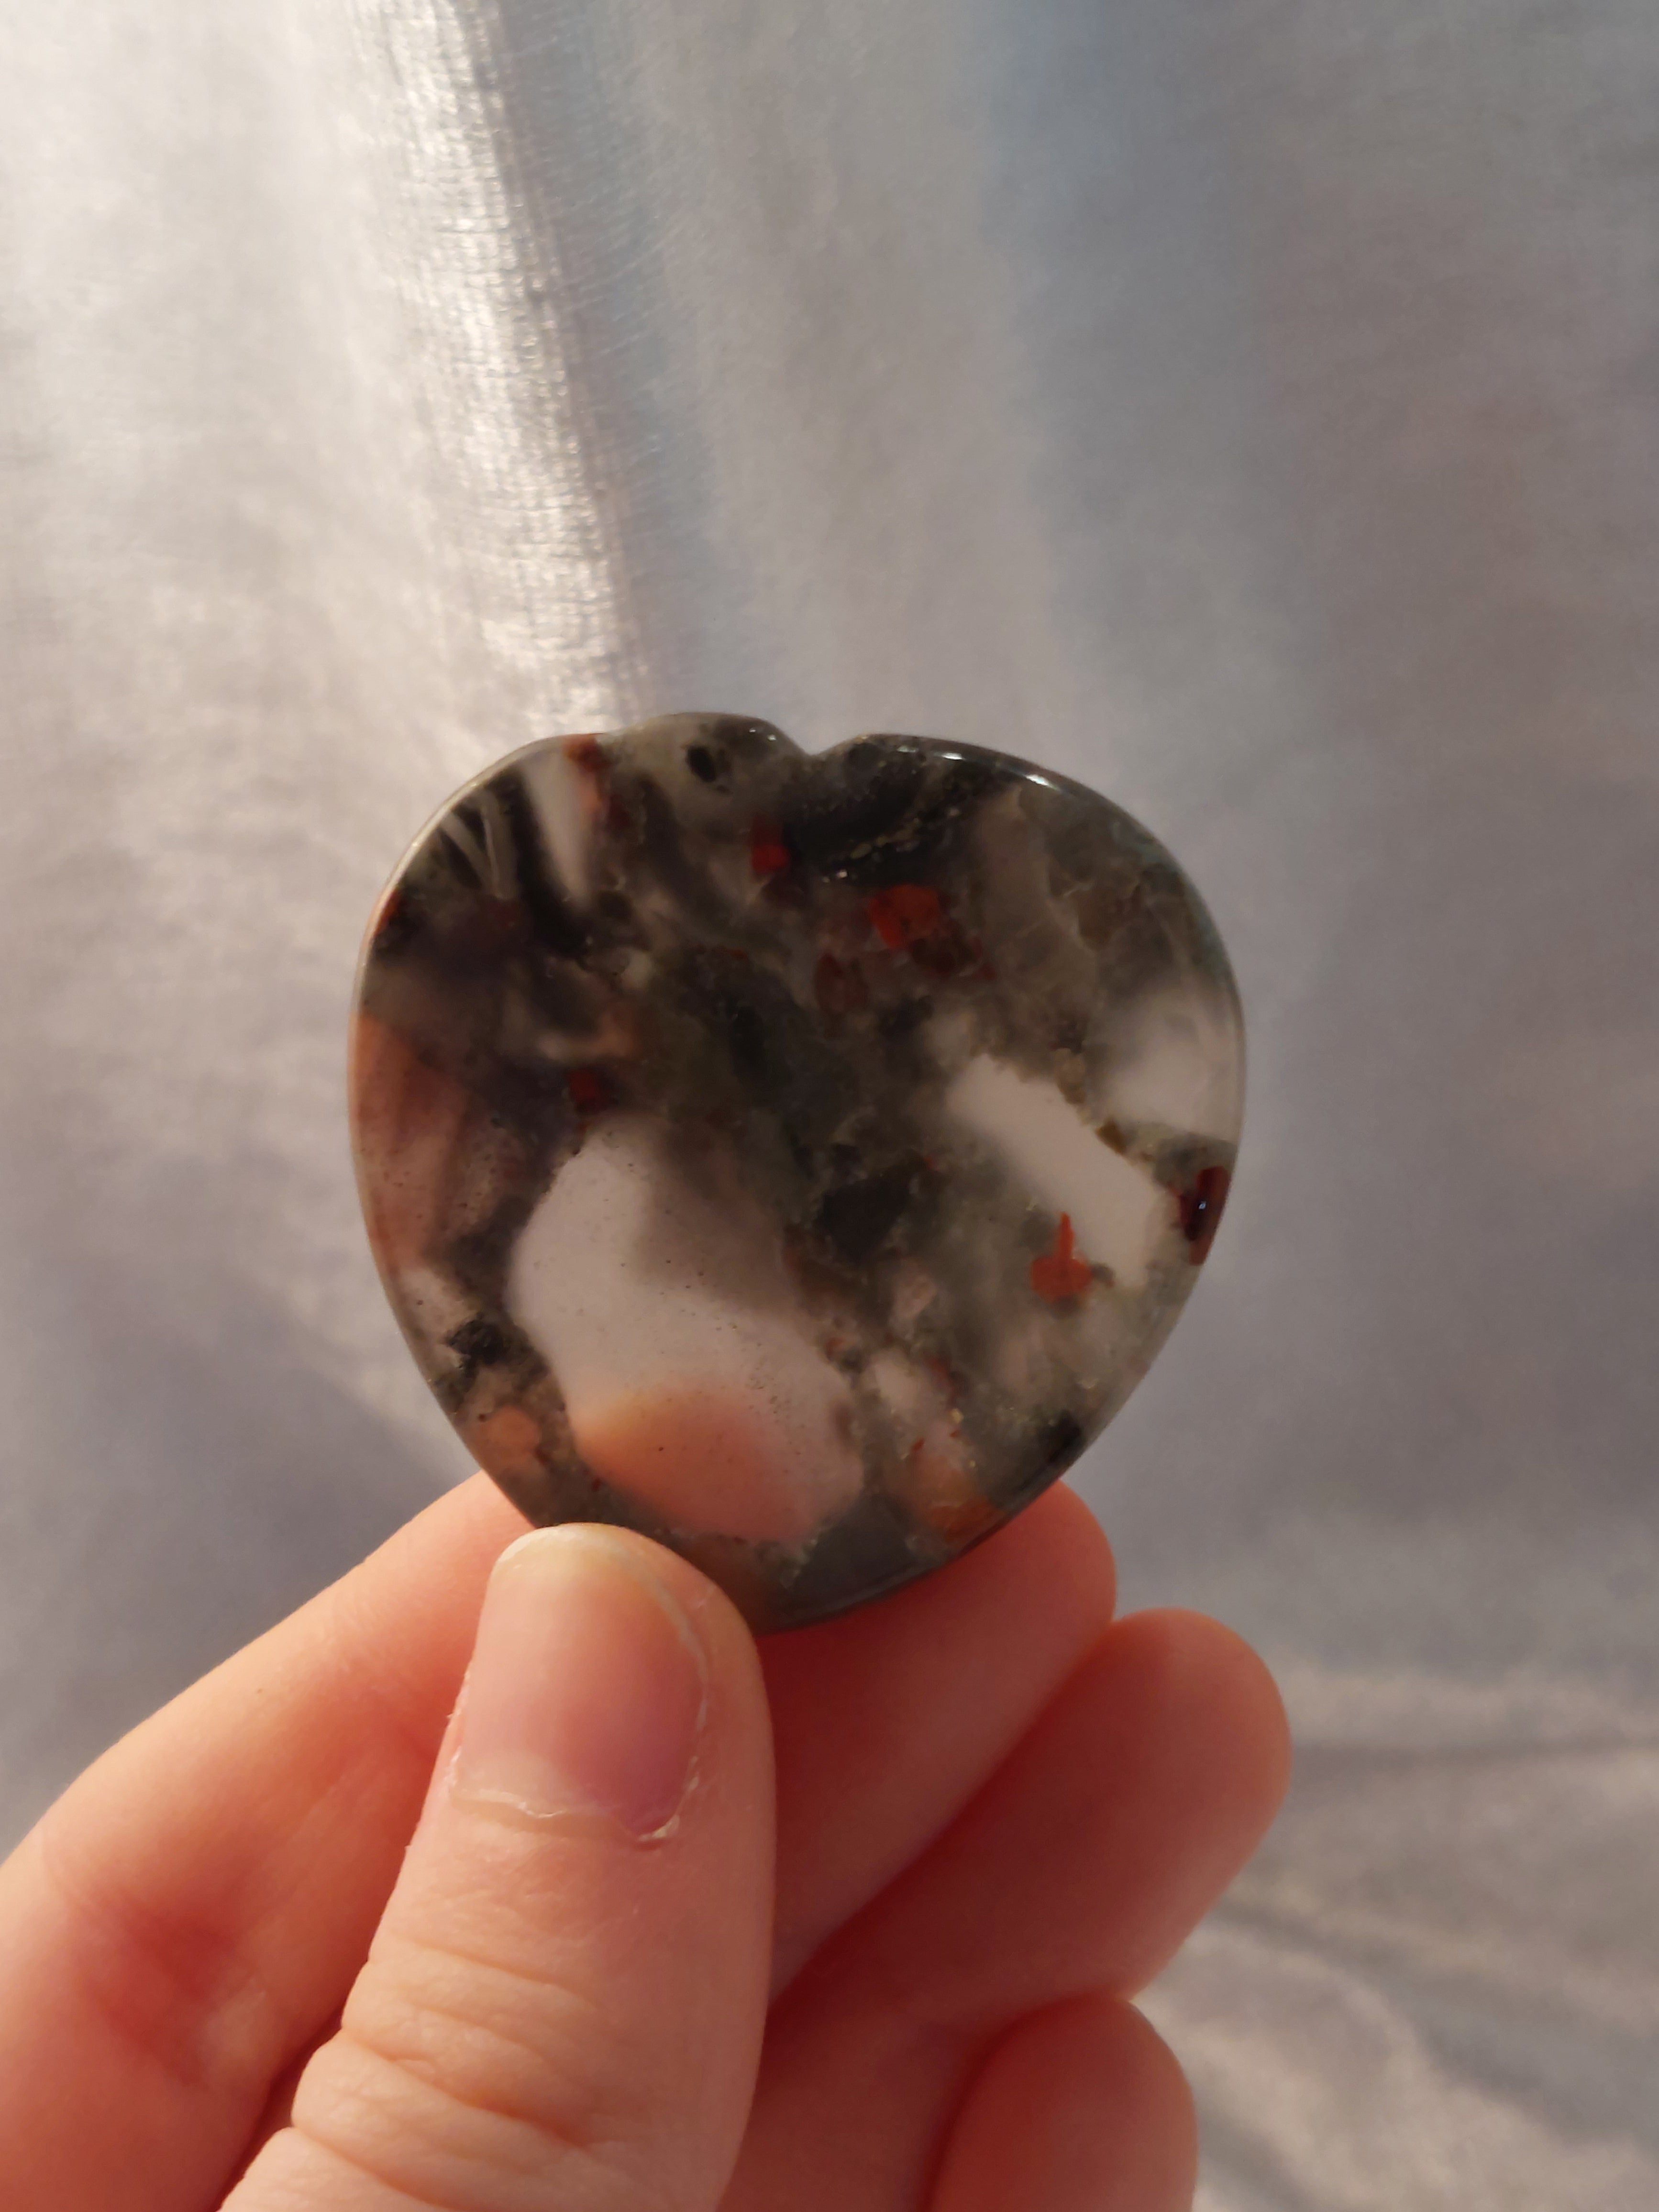 Bloodstone (Heliotrope) Heart Shaped Thumb Stone